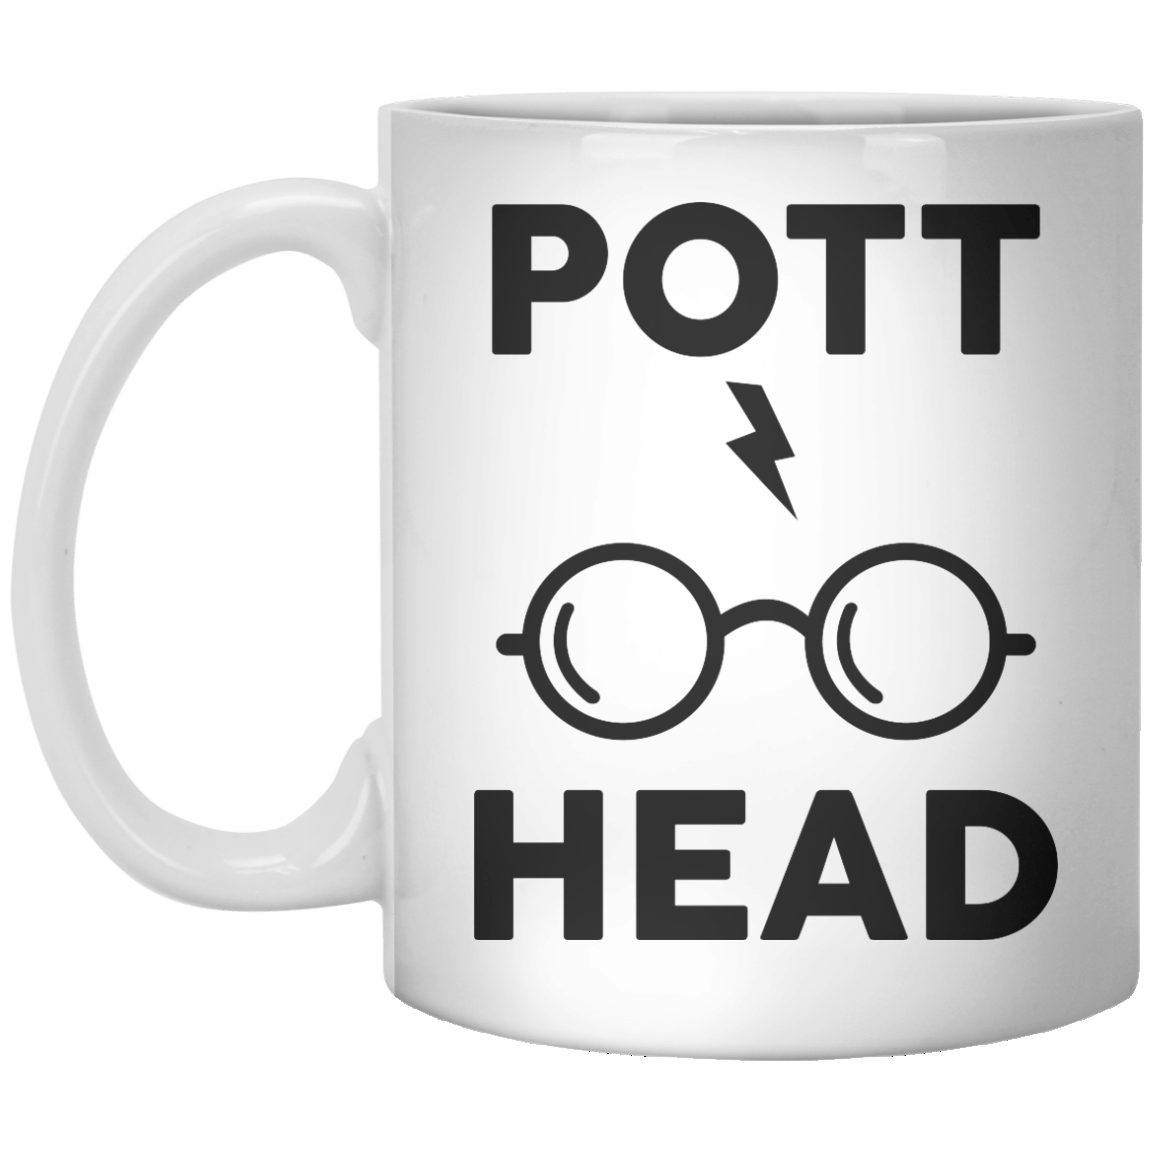 Pott Head - Shirtoopia